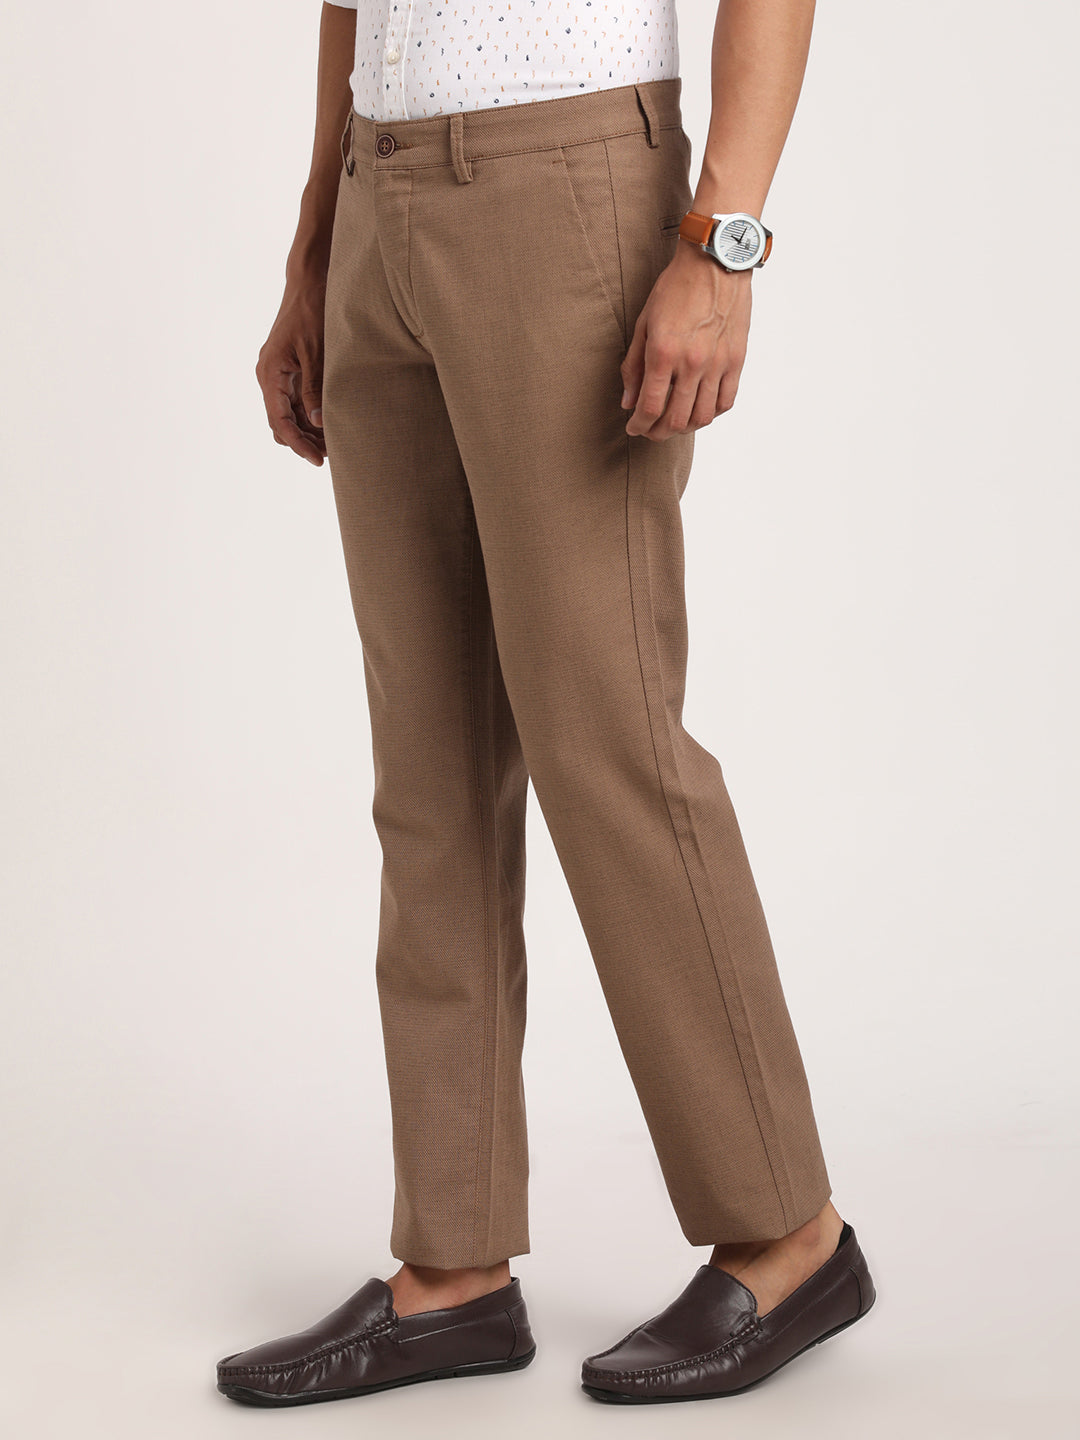 Turtle Men Cotton Khaki Self Design Ultra Slim Fit Stretchable Casual Trousers